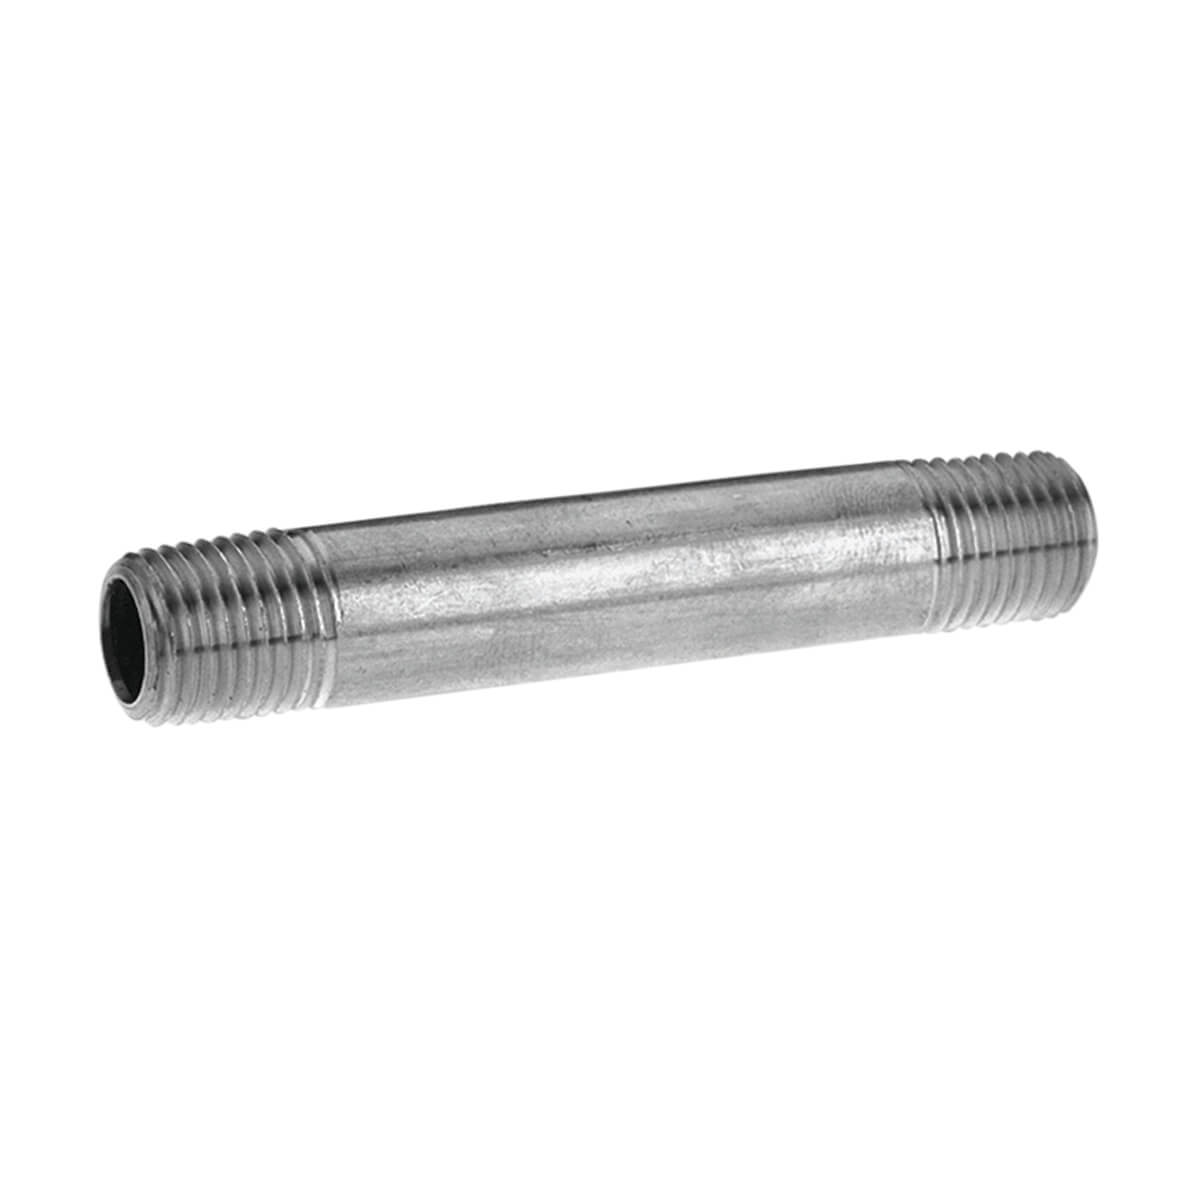 Pipe Nipple Galvanized Steel - 1-in x 4-in